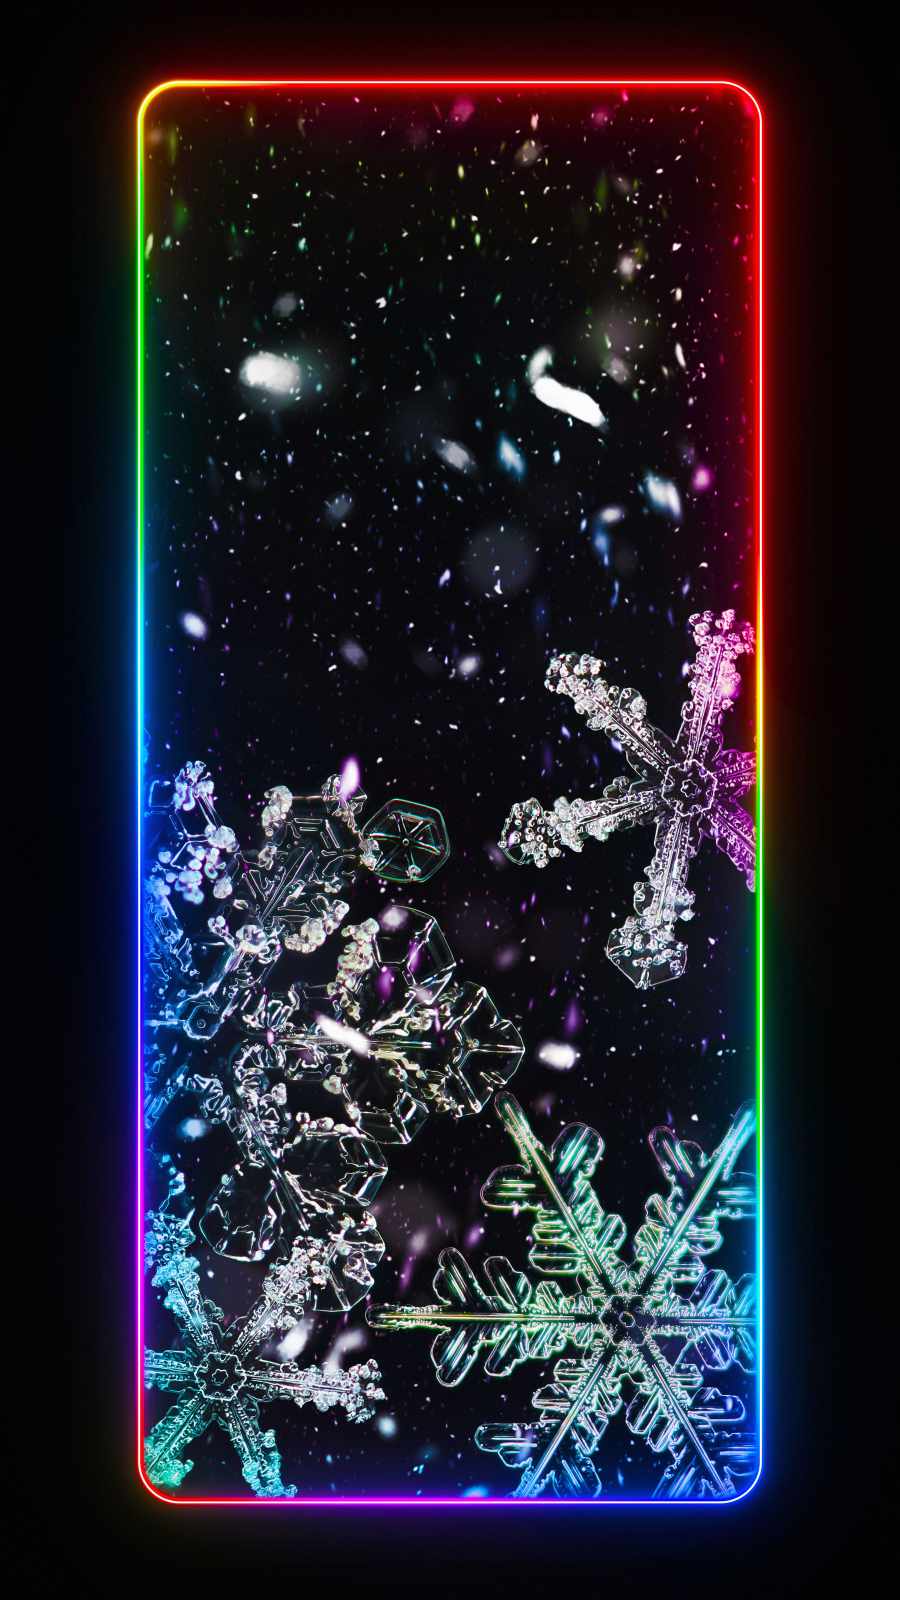 Neon Winter Christmas iPhone Wallpaper